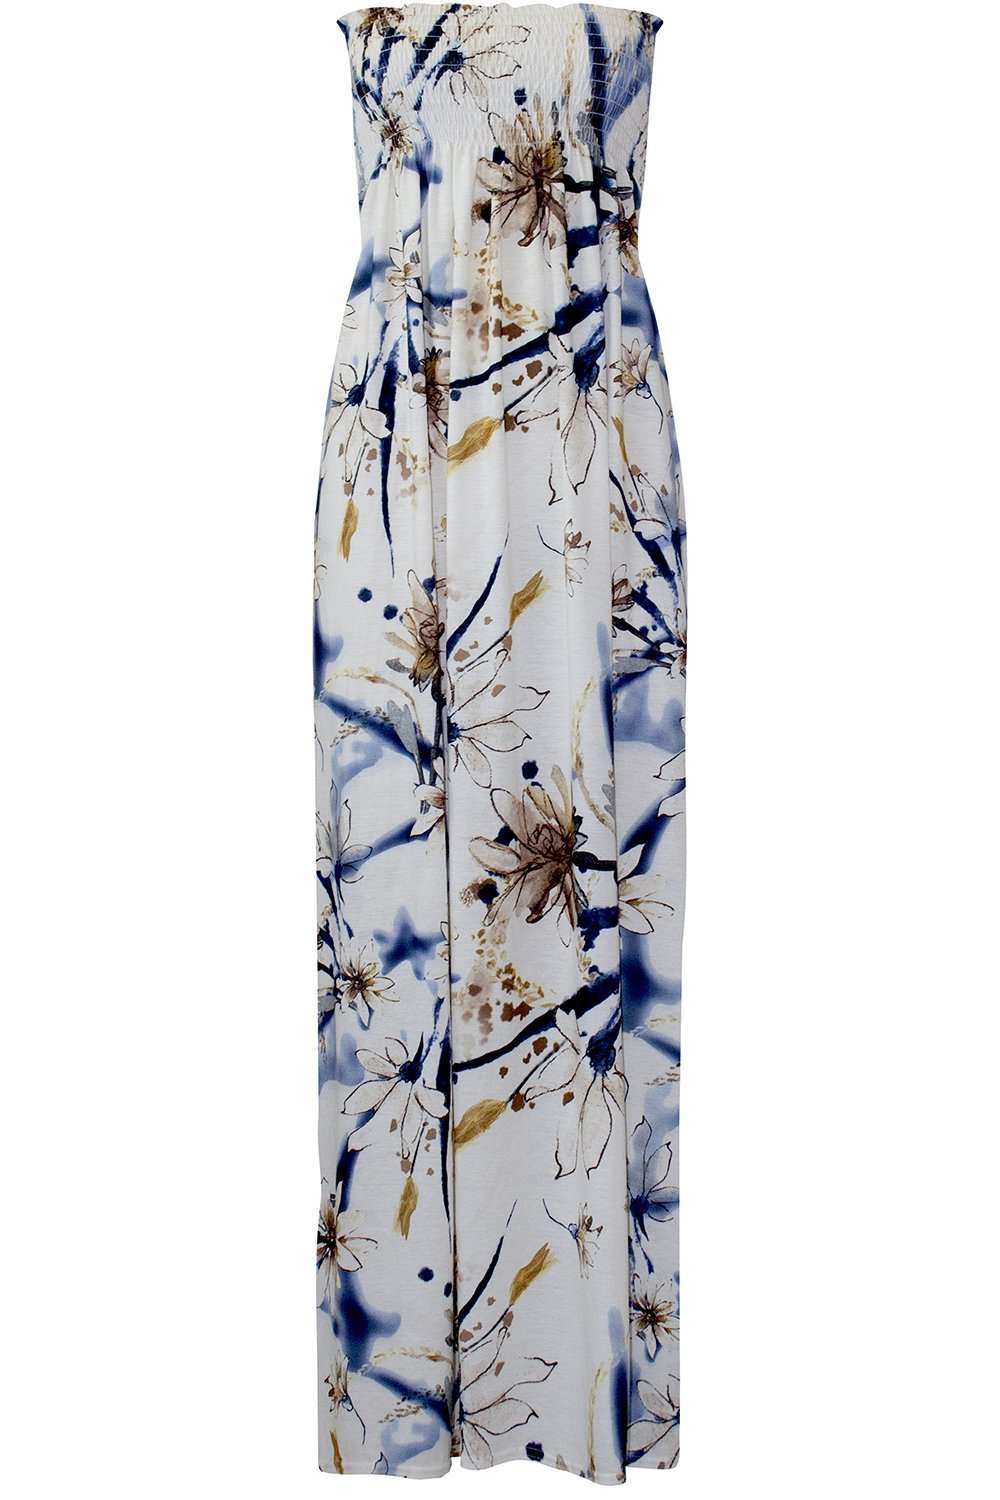 Cassadie Sheering Strapless Floral Maxi Dress - bejealous-com